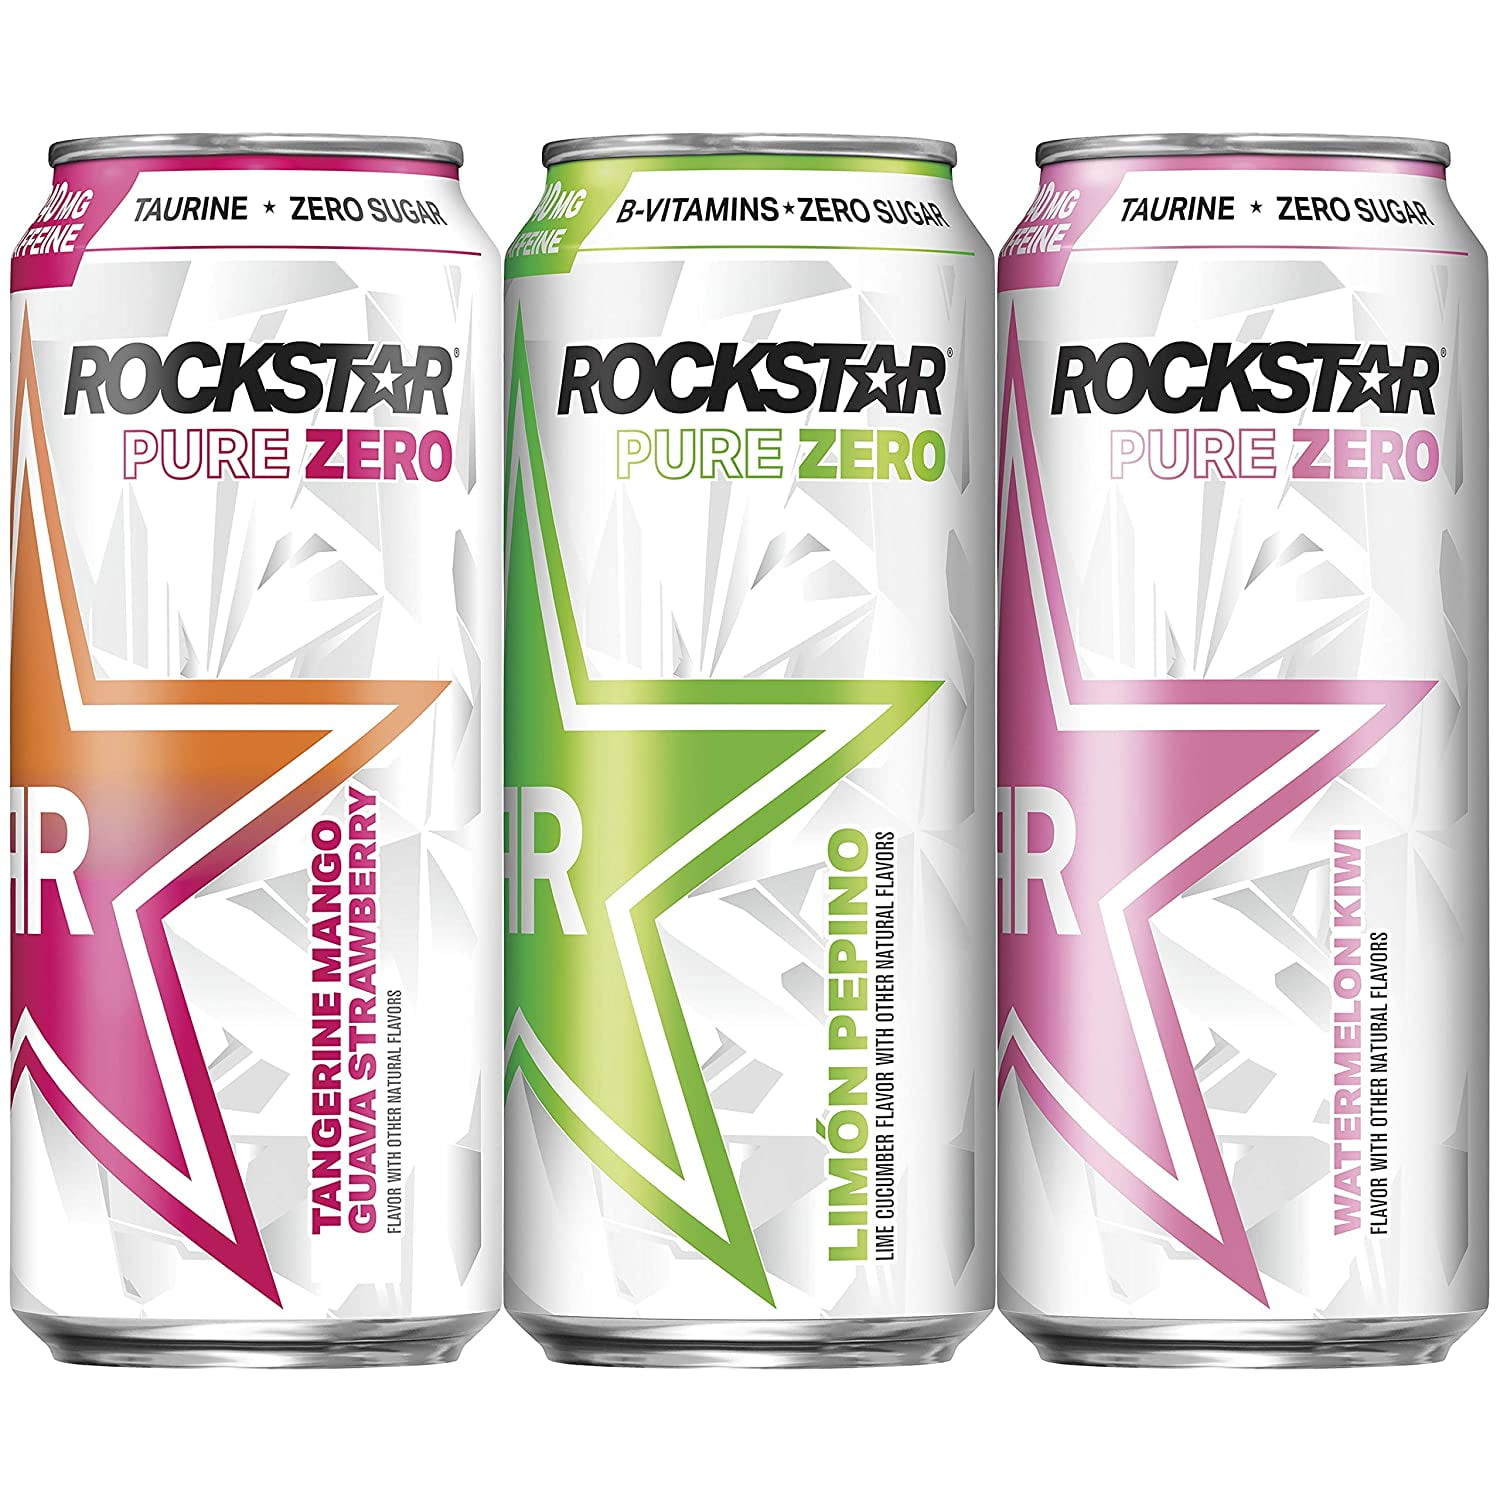 (12 Cans) Rockstar Pure Zero Energy Drink, 3 Flavor Variety Pack, 16 fl